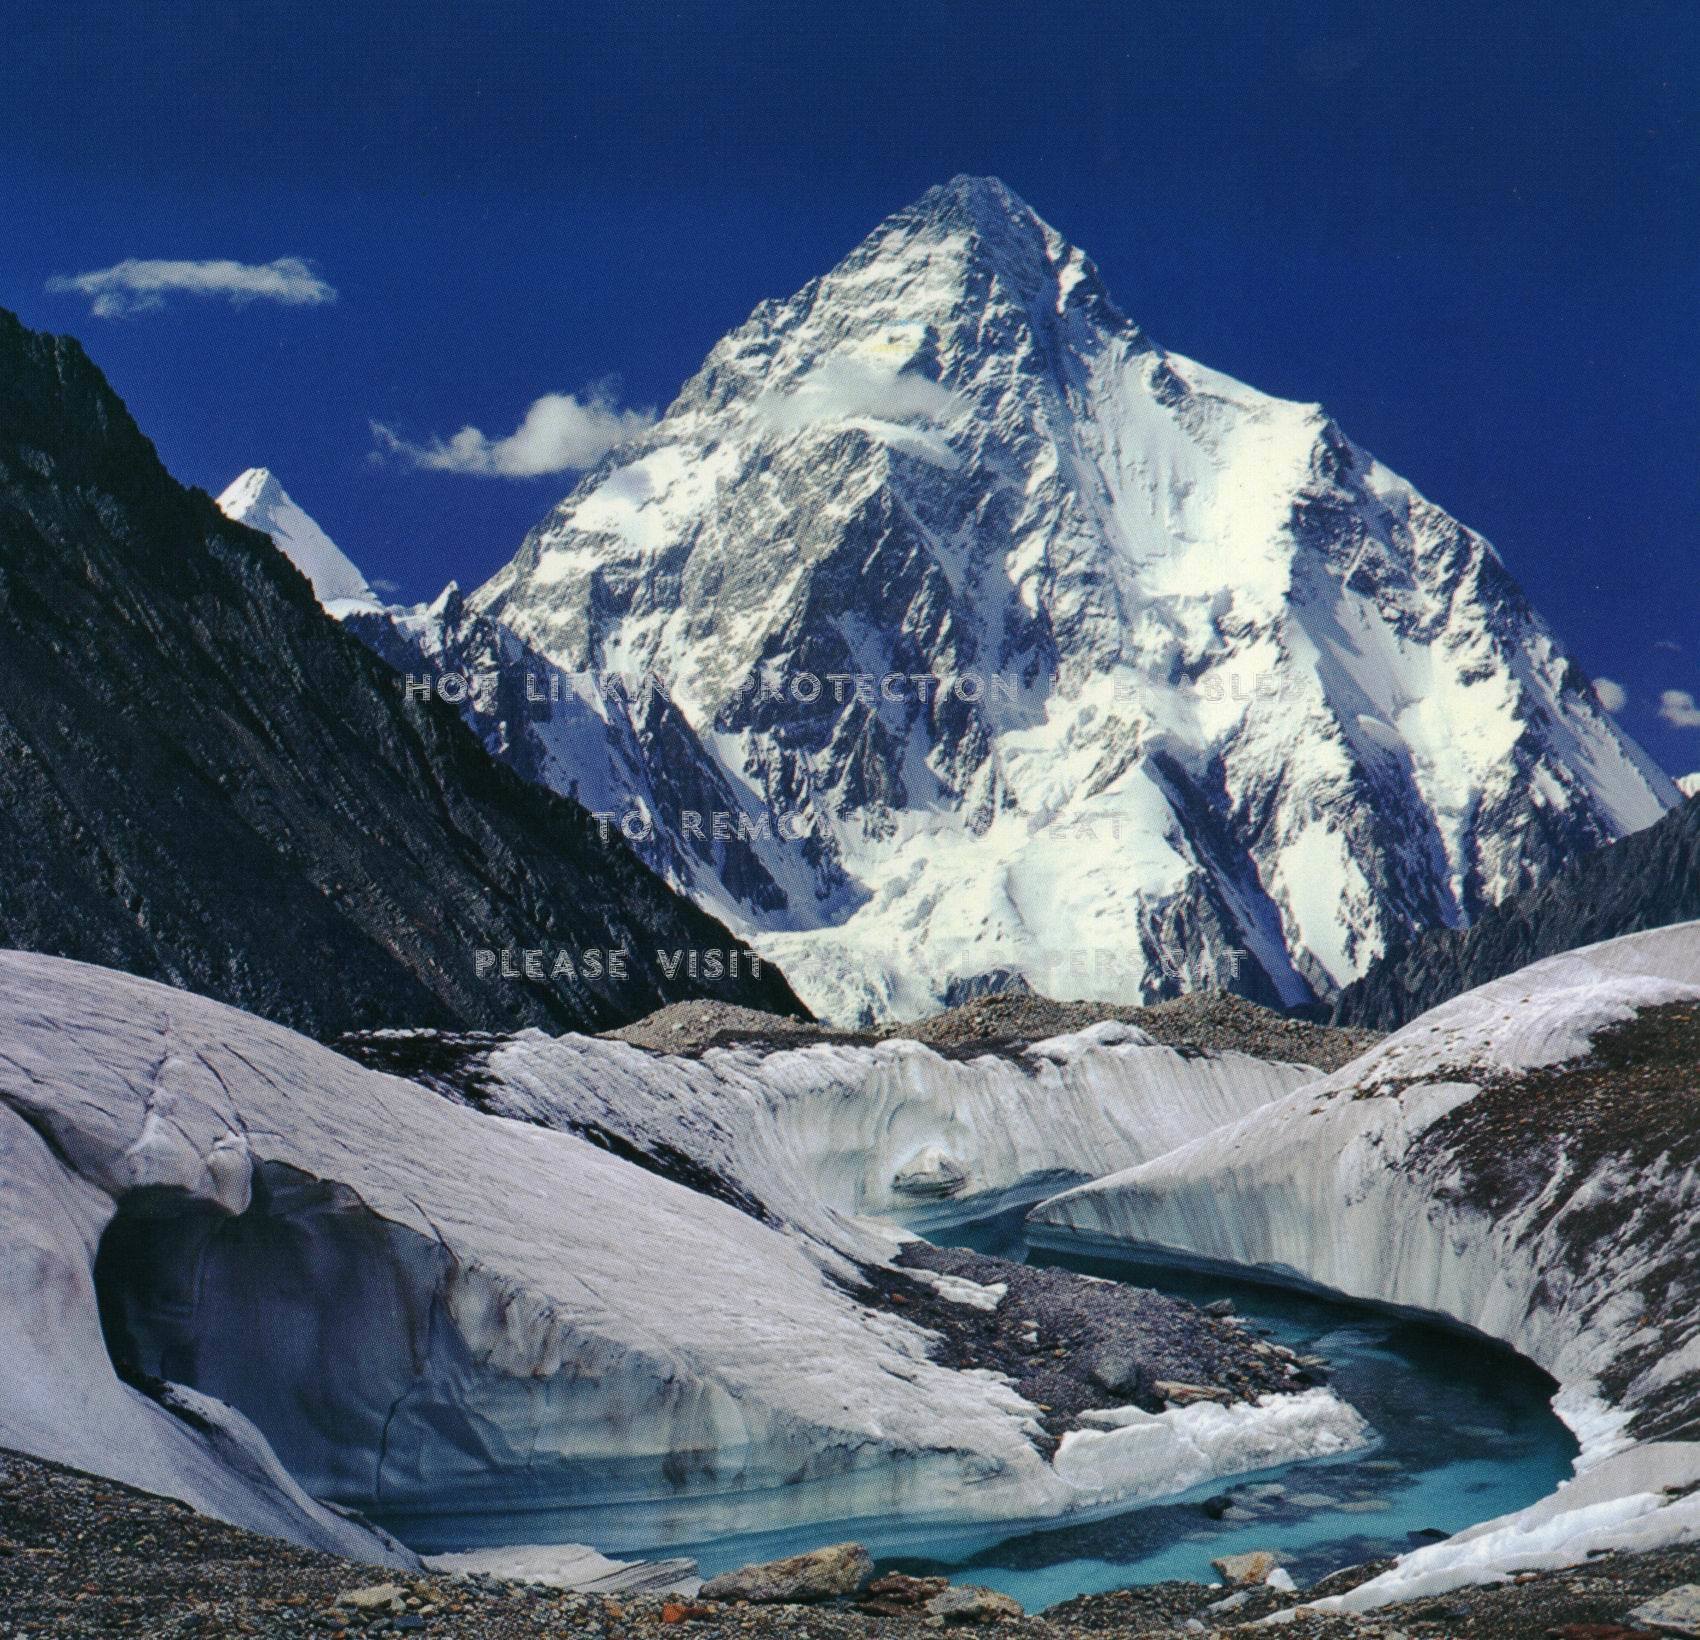 k2 2nd highest peak of the world (pakistan)